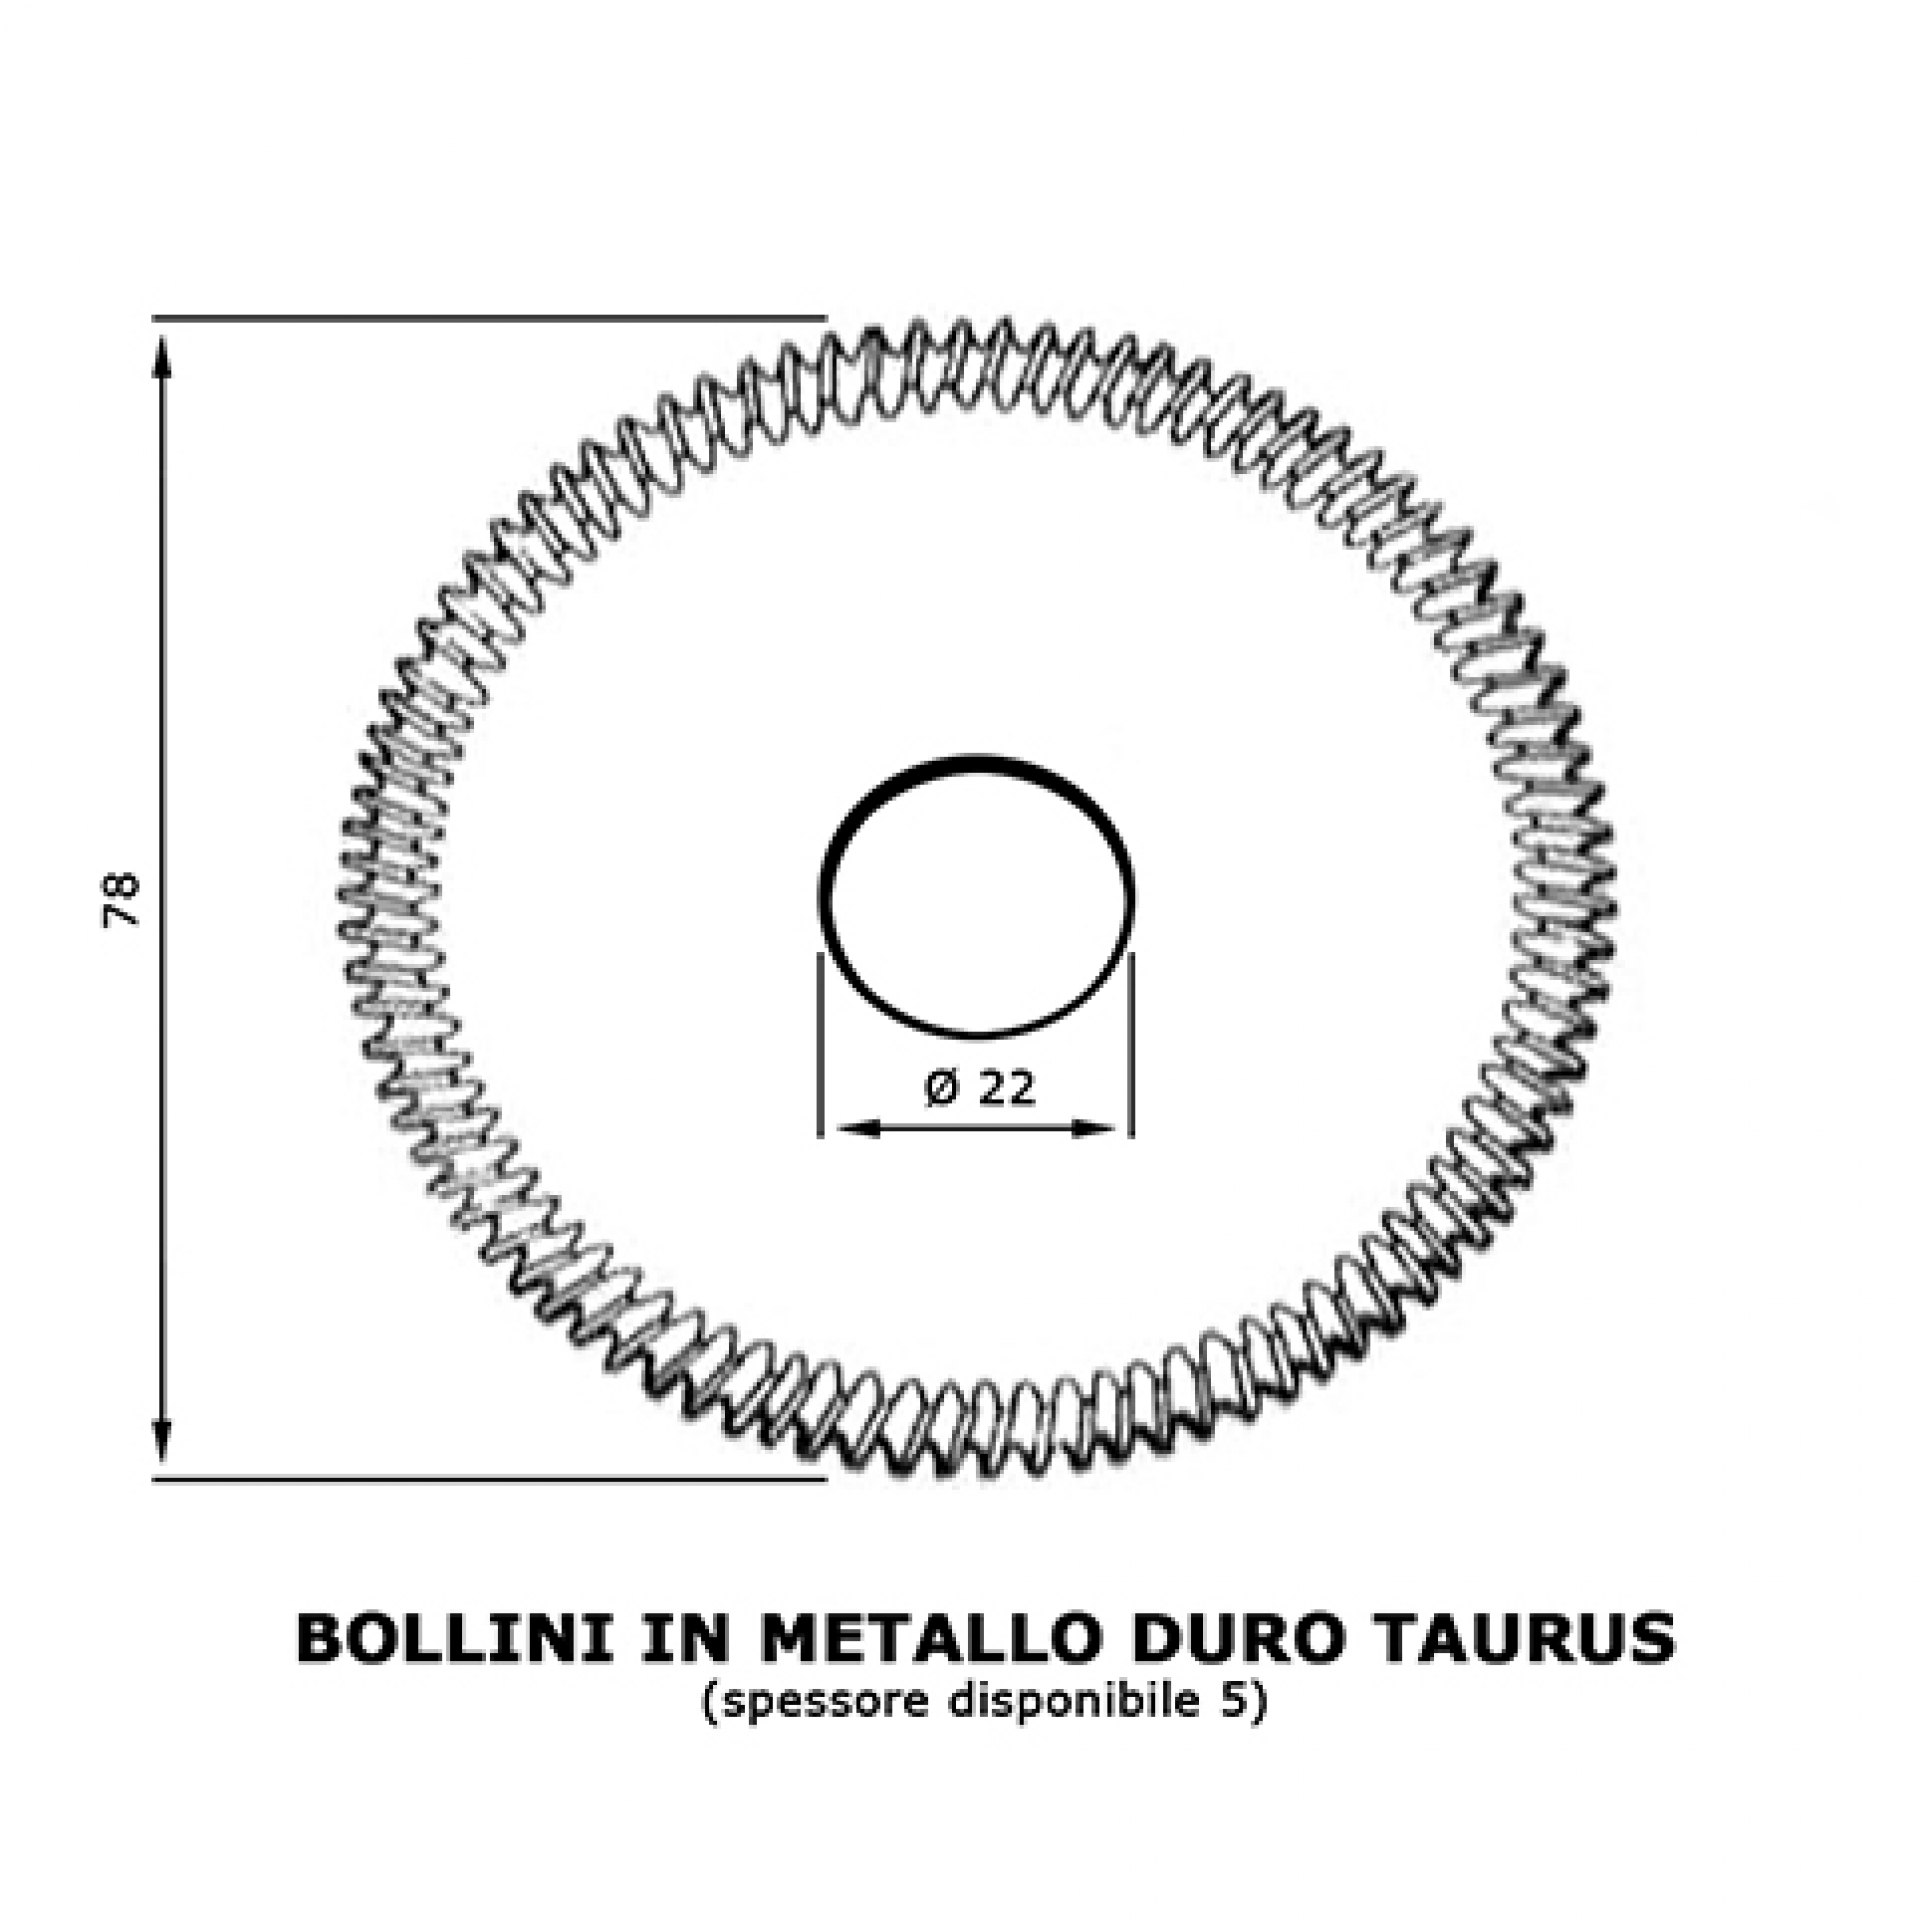 Bollini in Metallo Duro TAURUS. 